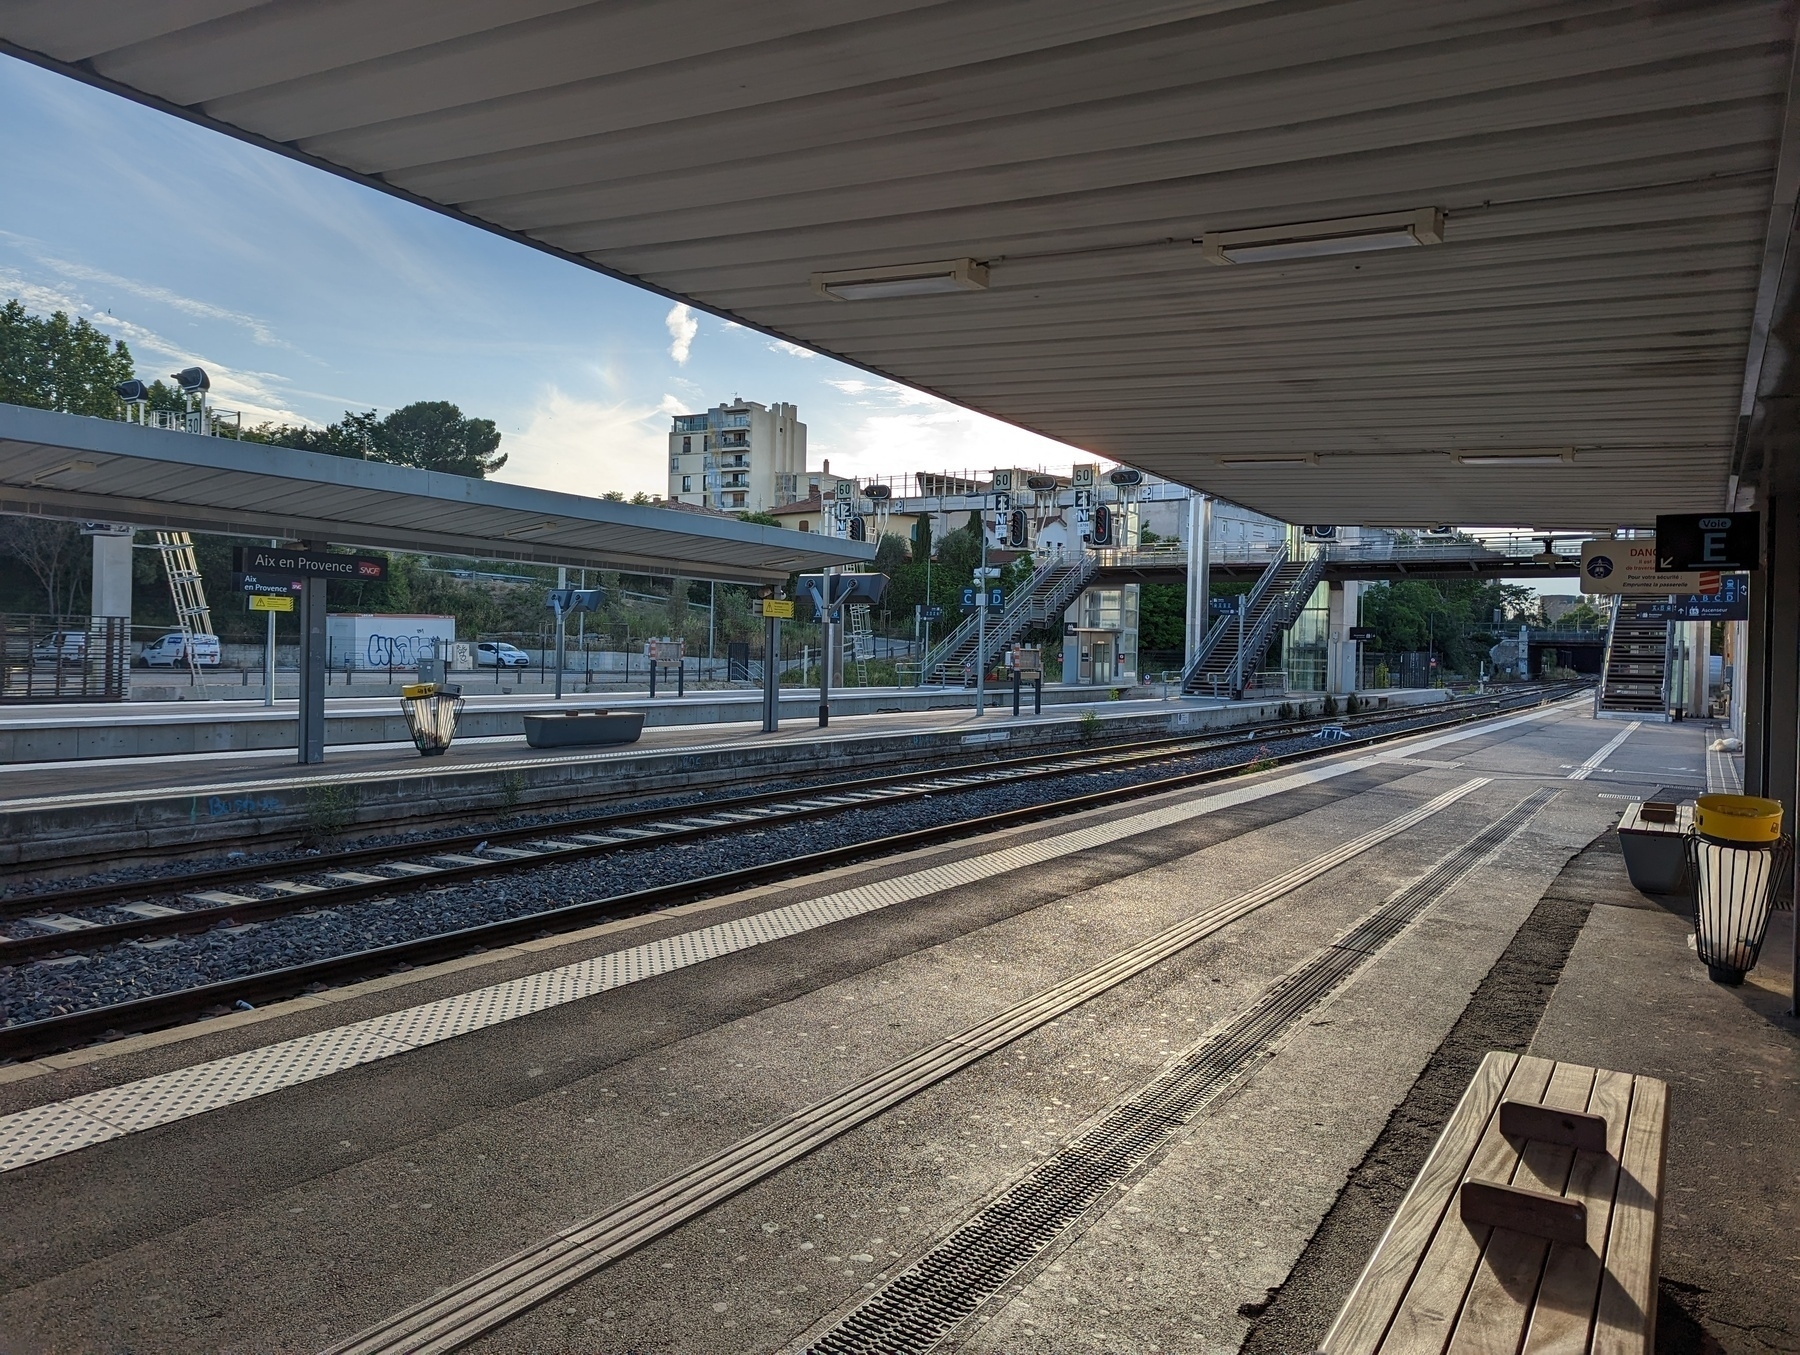 Railway station Aix en Provence showing empty platforms